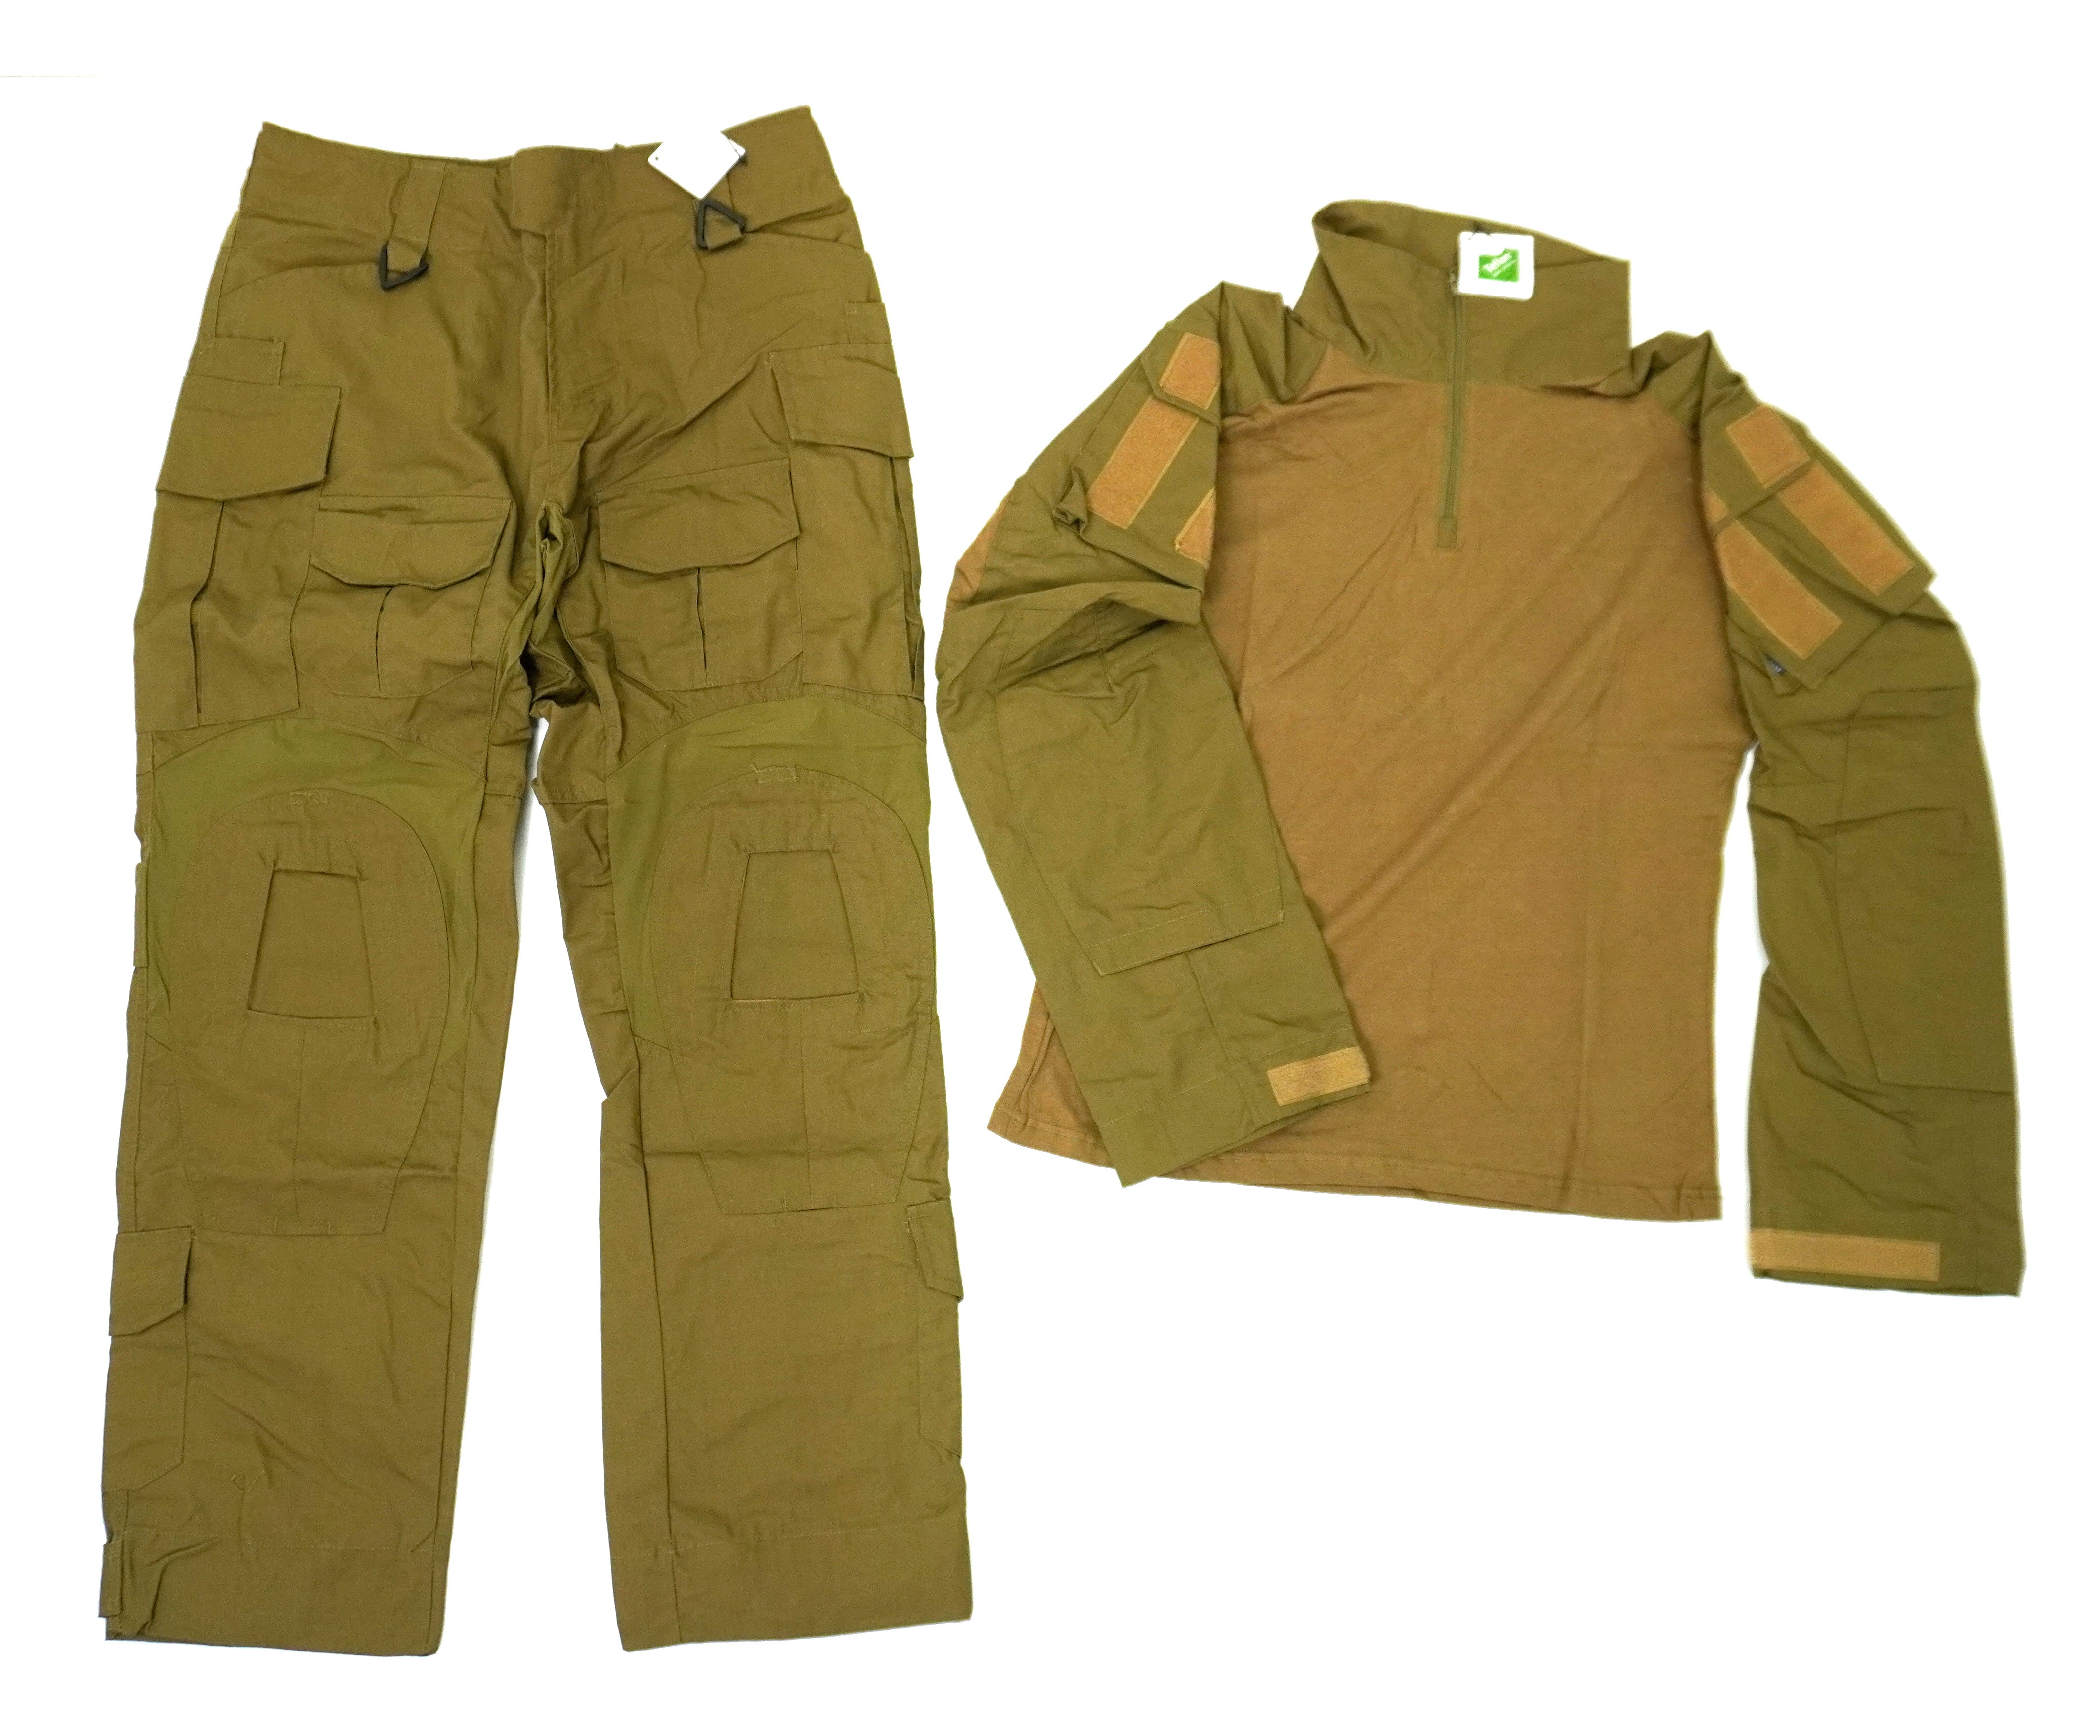 Tactical G3 Trouser & UBAC Uniform Set Coyote